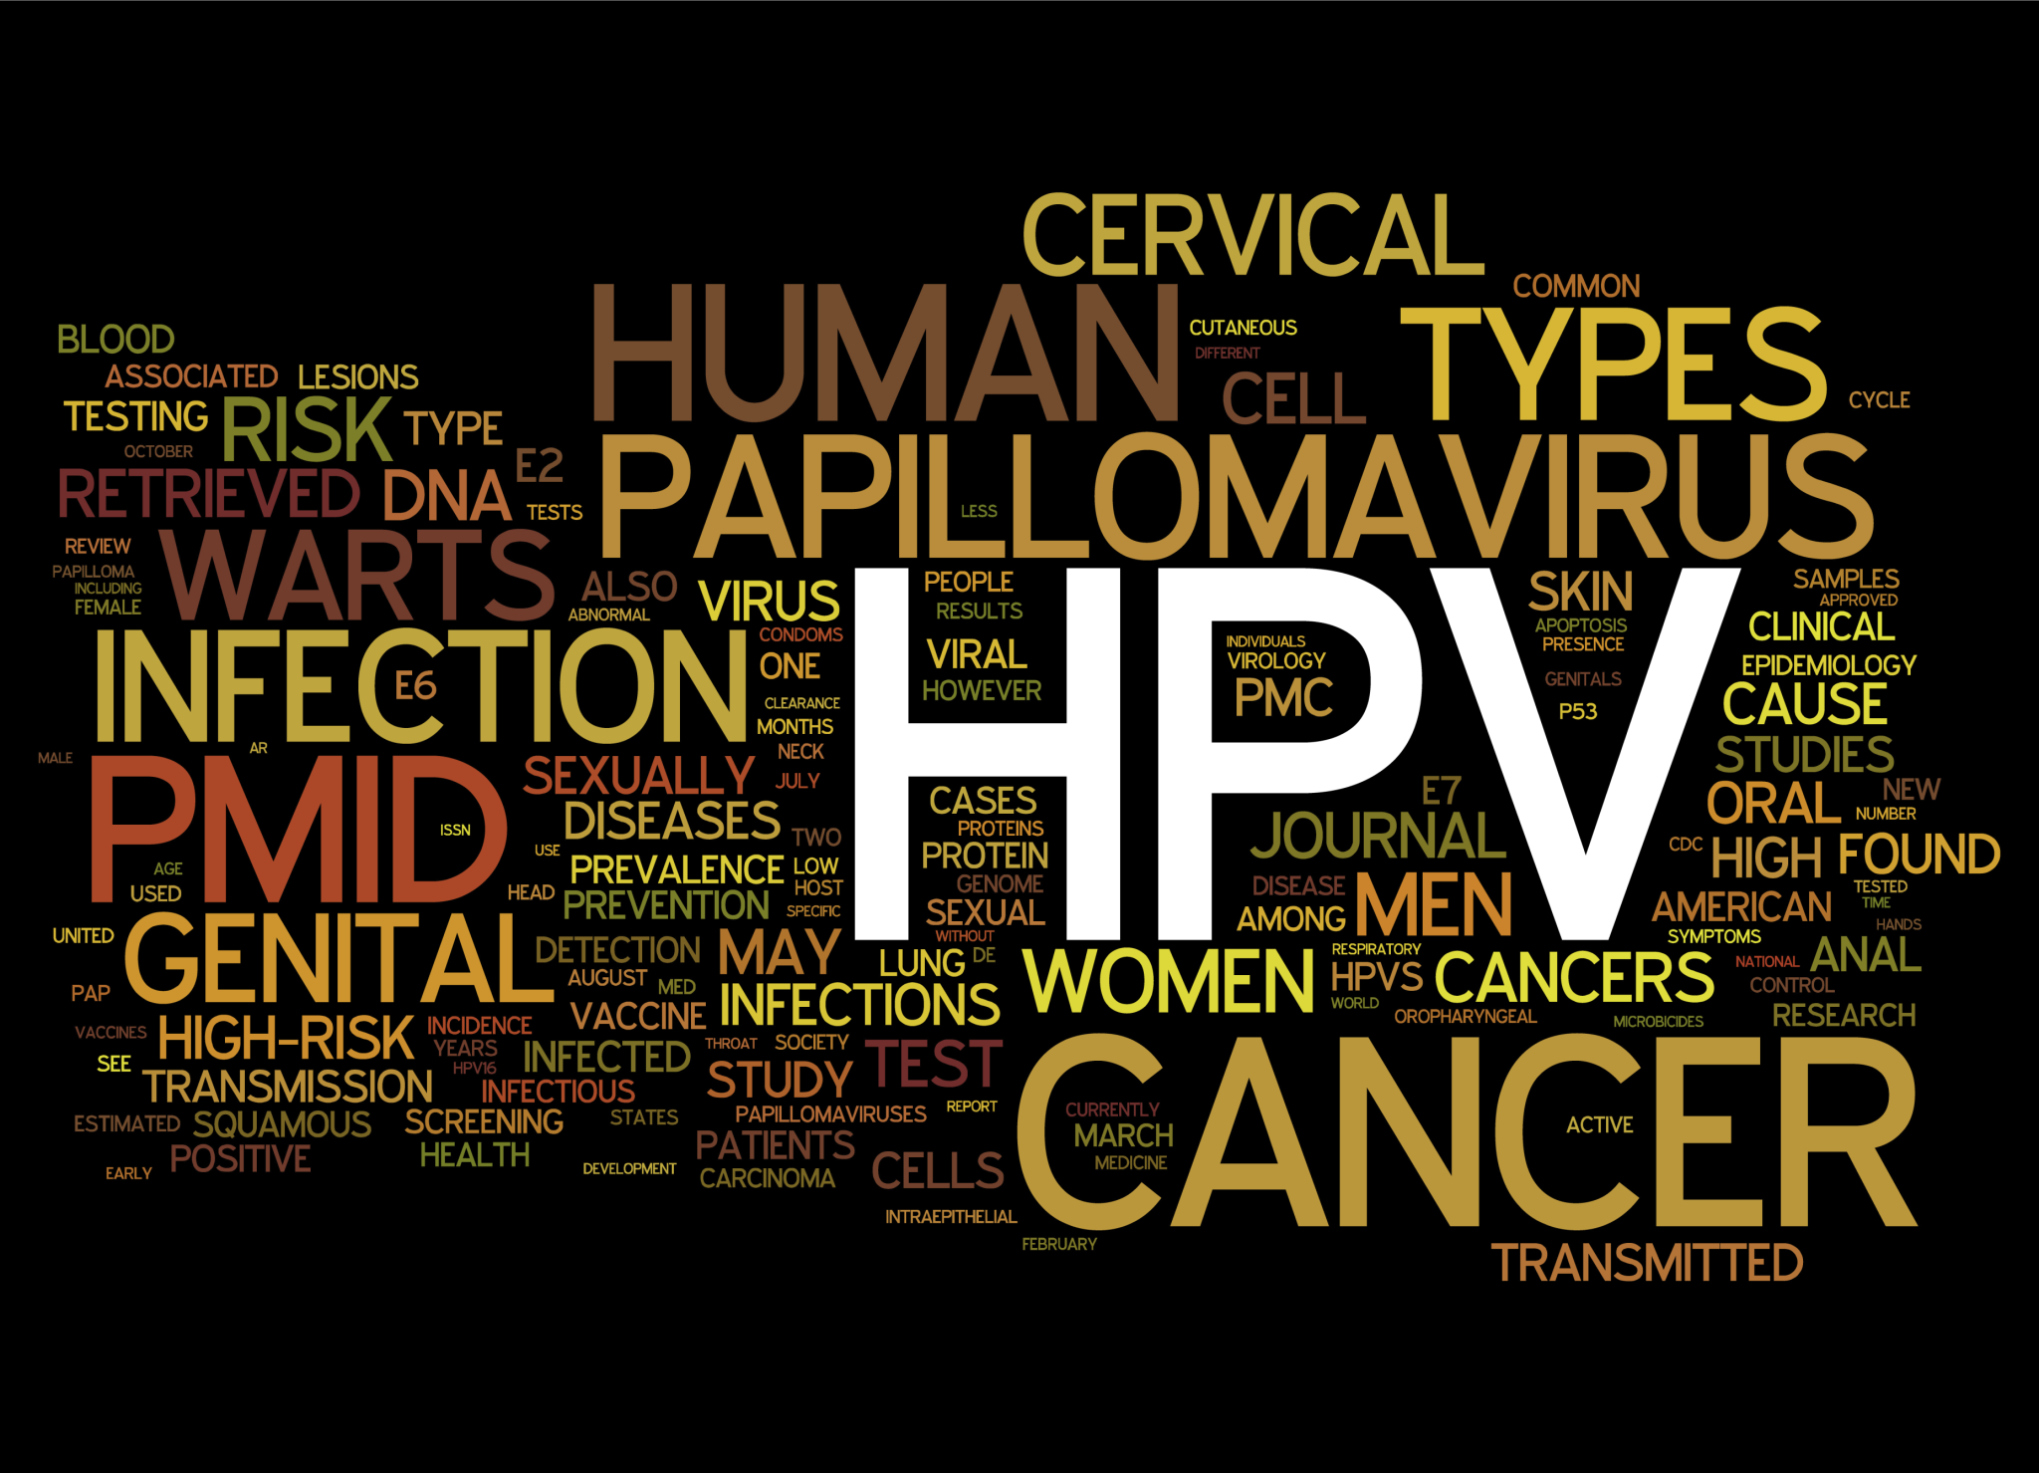 Human papillomavirus (HPV) infection, transmission can increase skin